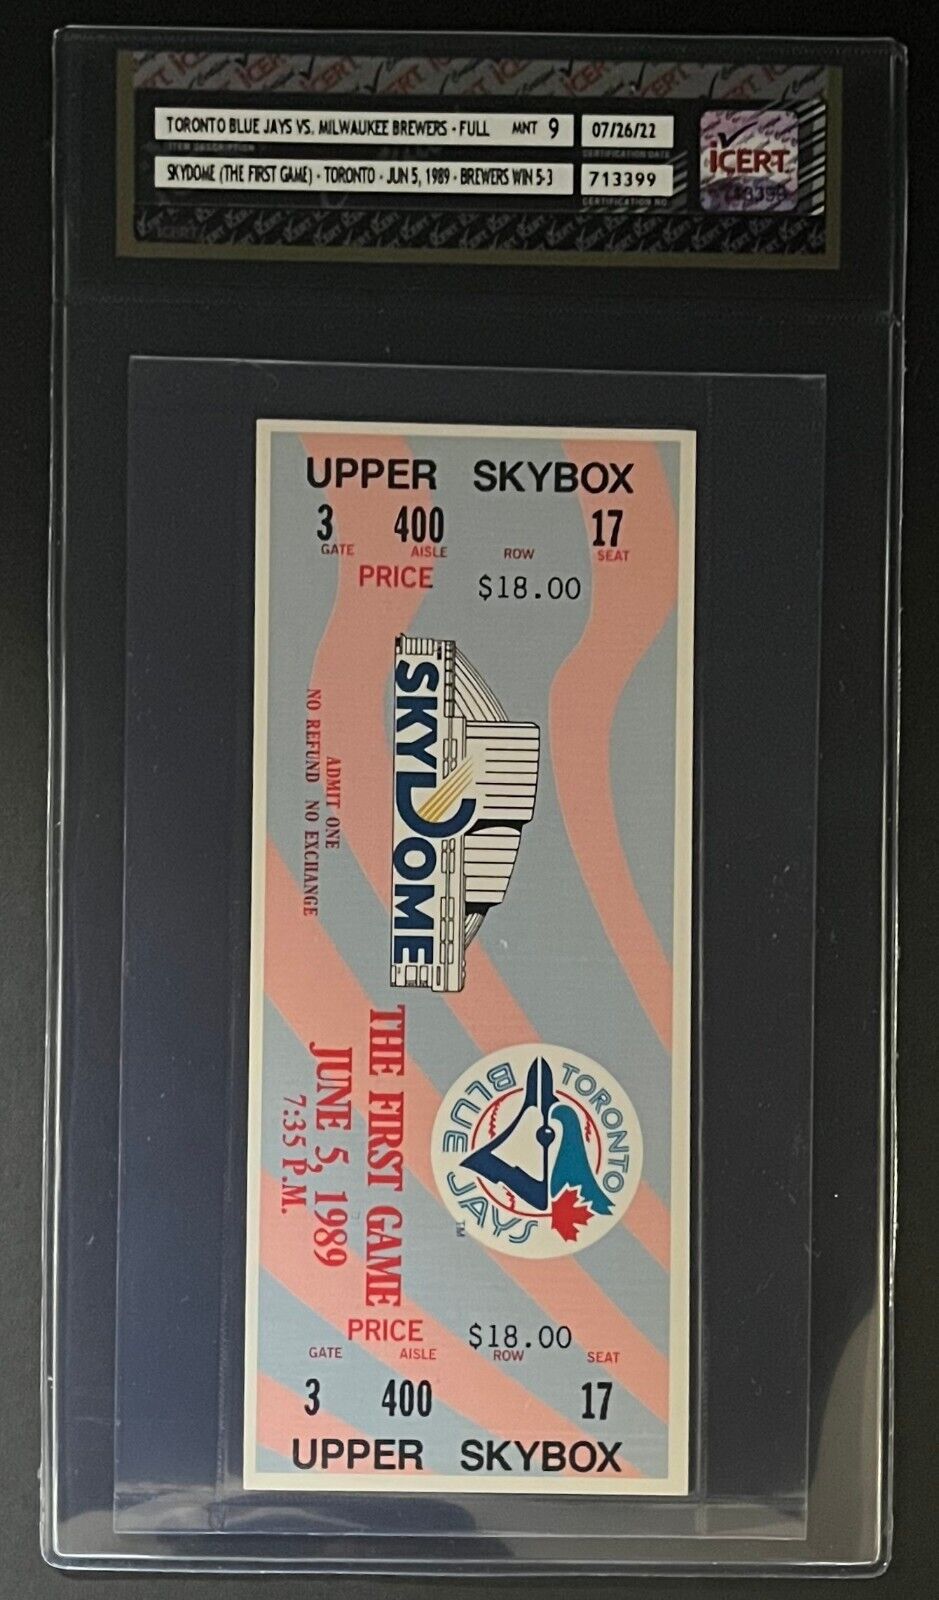 1989 Toronto Blue Jays 1st Game SkyDome Full Ticket vs Milwaukee Brewers iCert 9